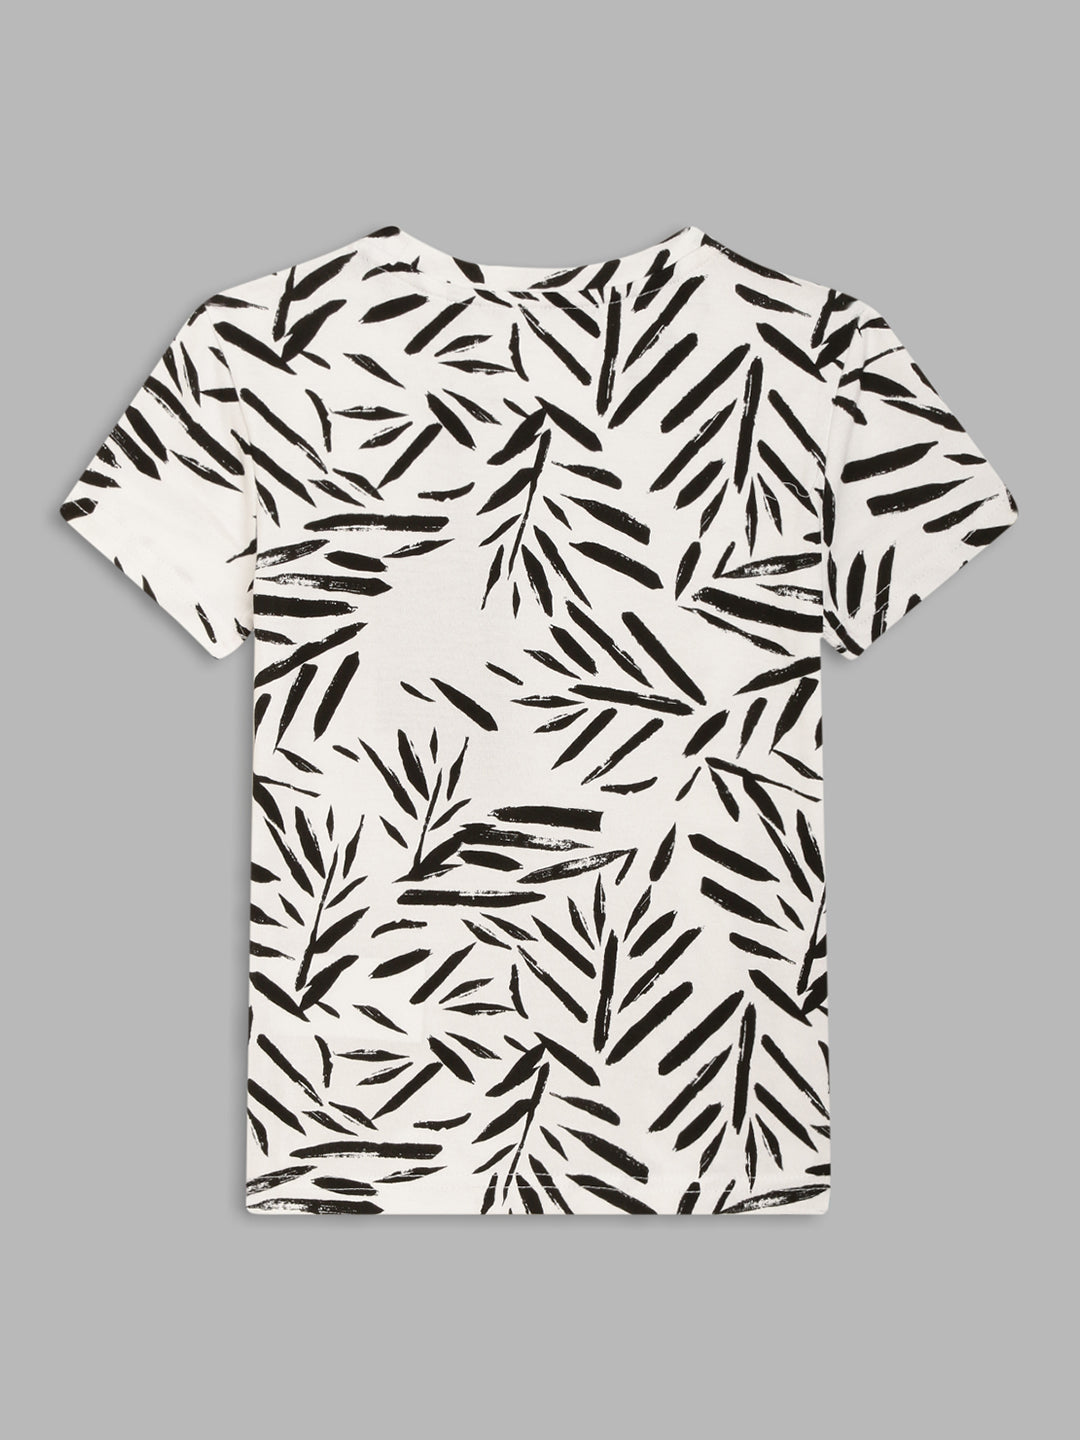 Antony Morato Boys White  Black Floral Printed Cotton Tropical T-shirt